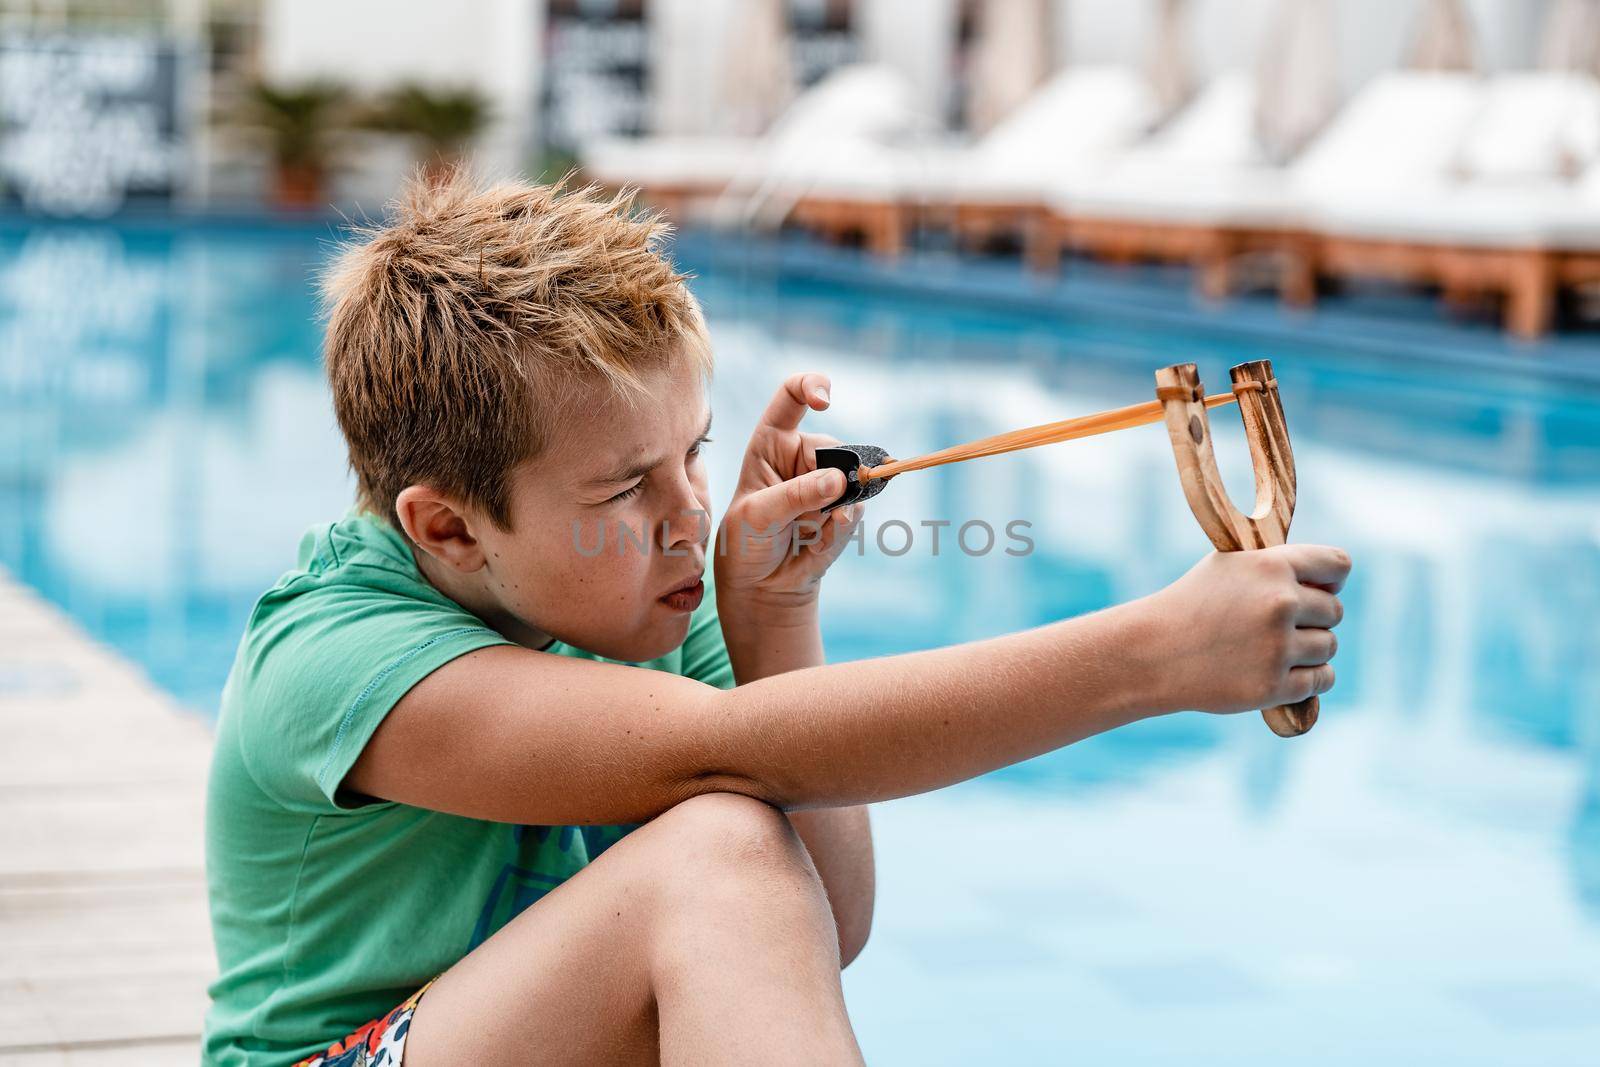 A boy shoots a slingshot near the pool. High quality photo